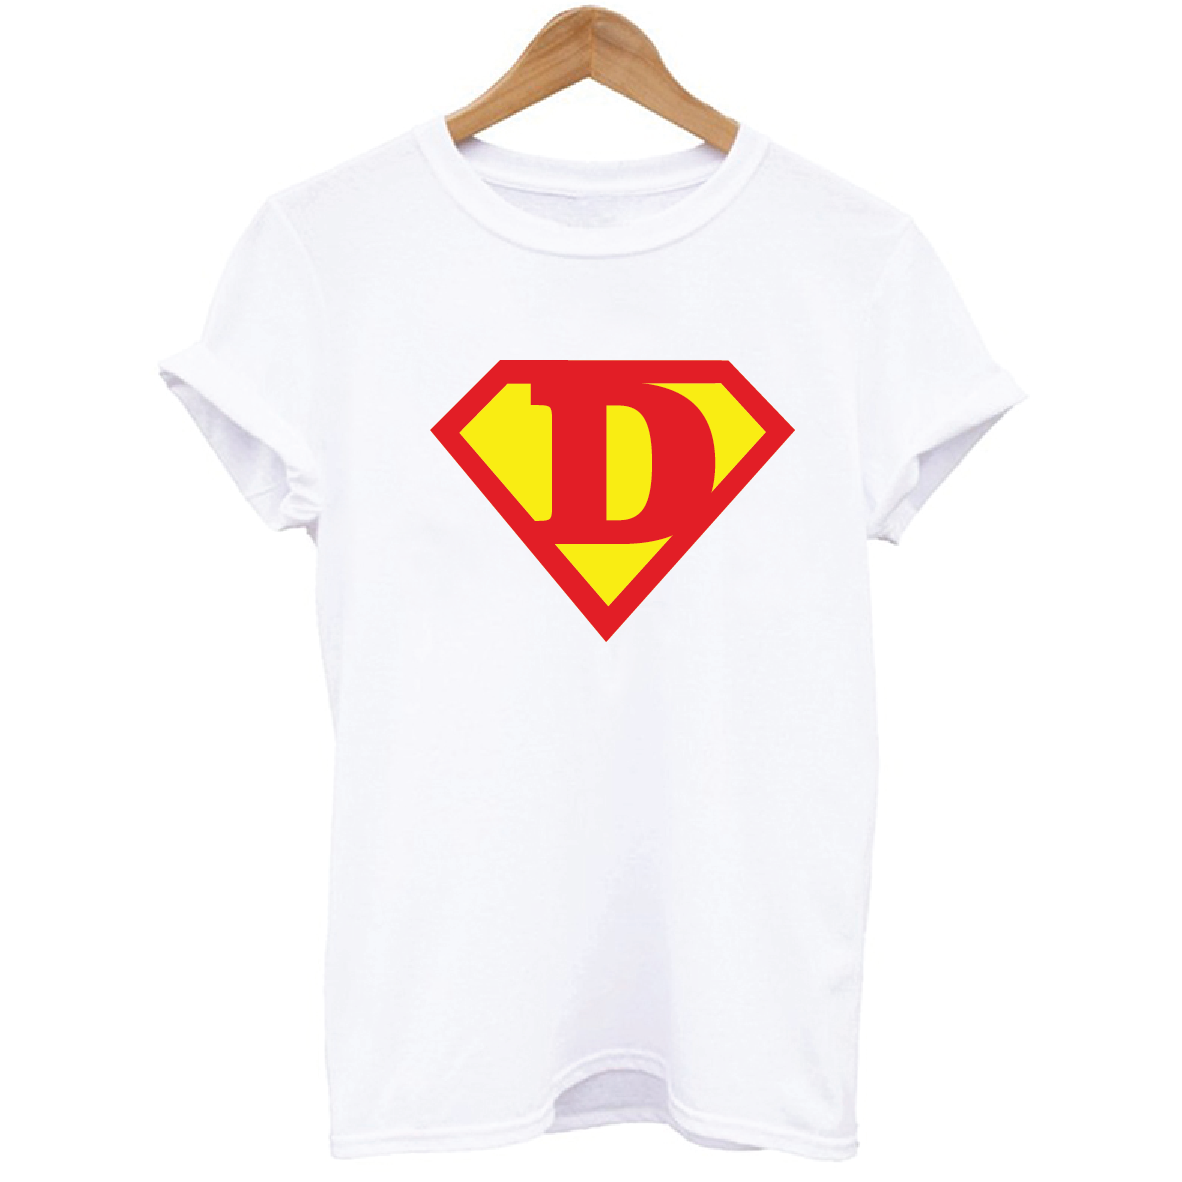 SuperDad T-shirt